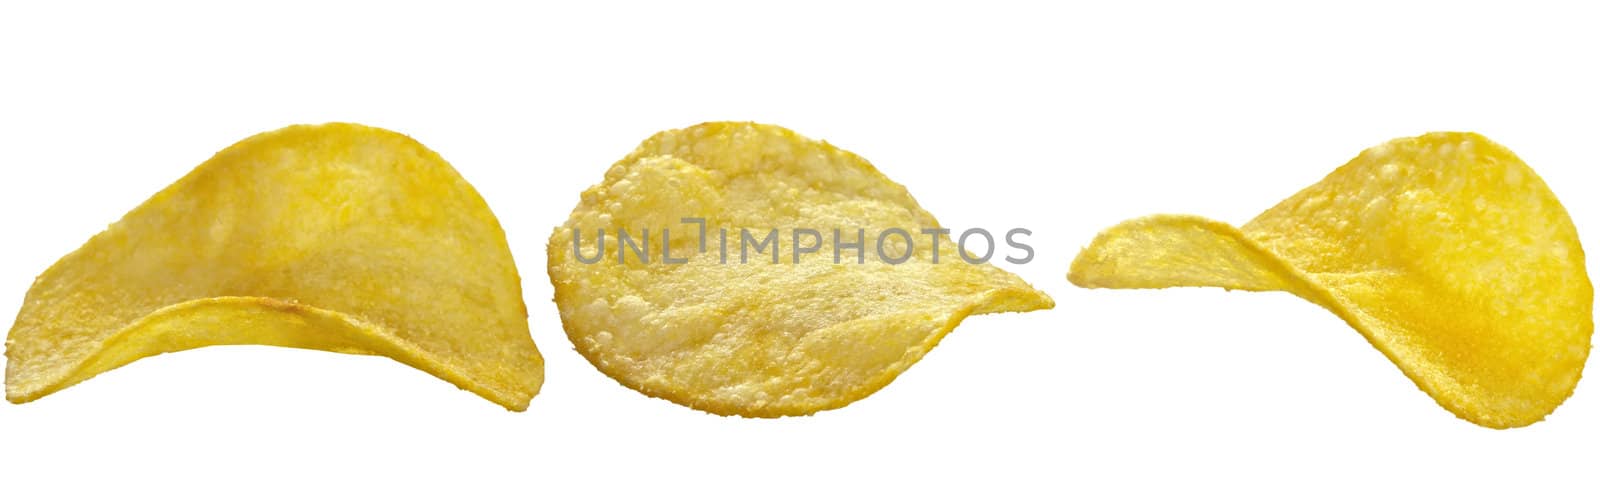 potato chips on white background by ozaiachin